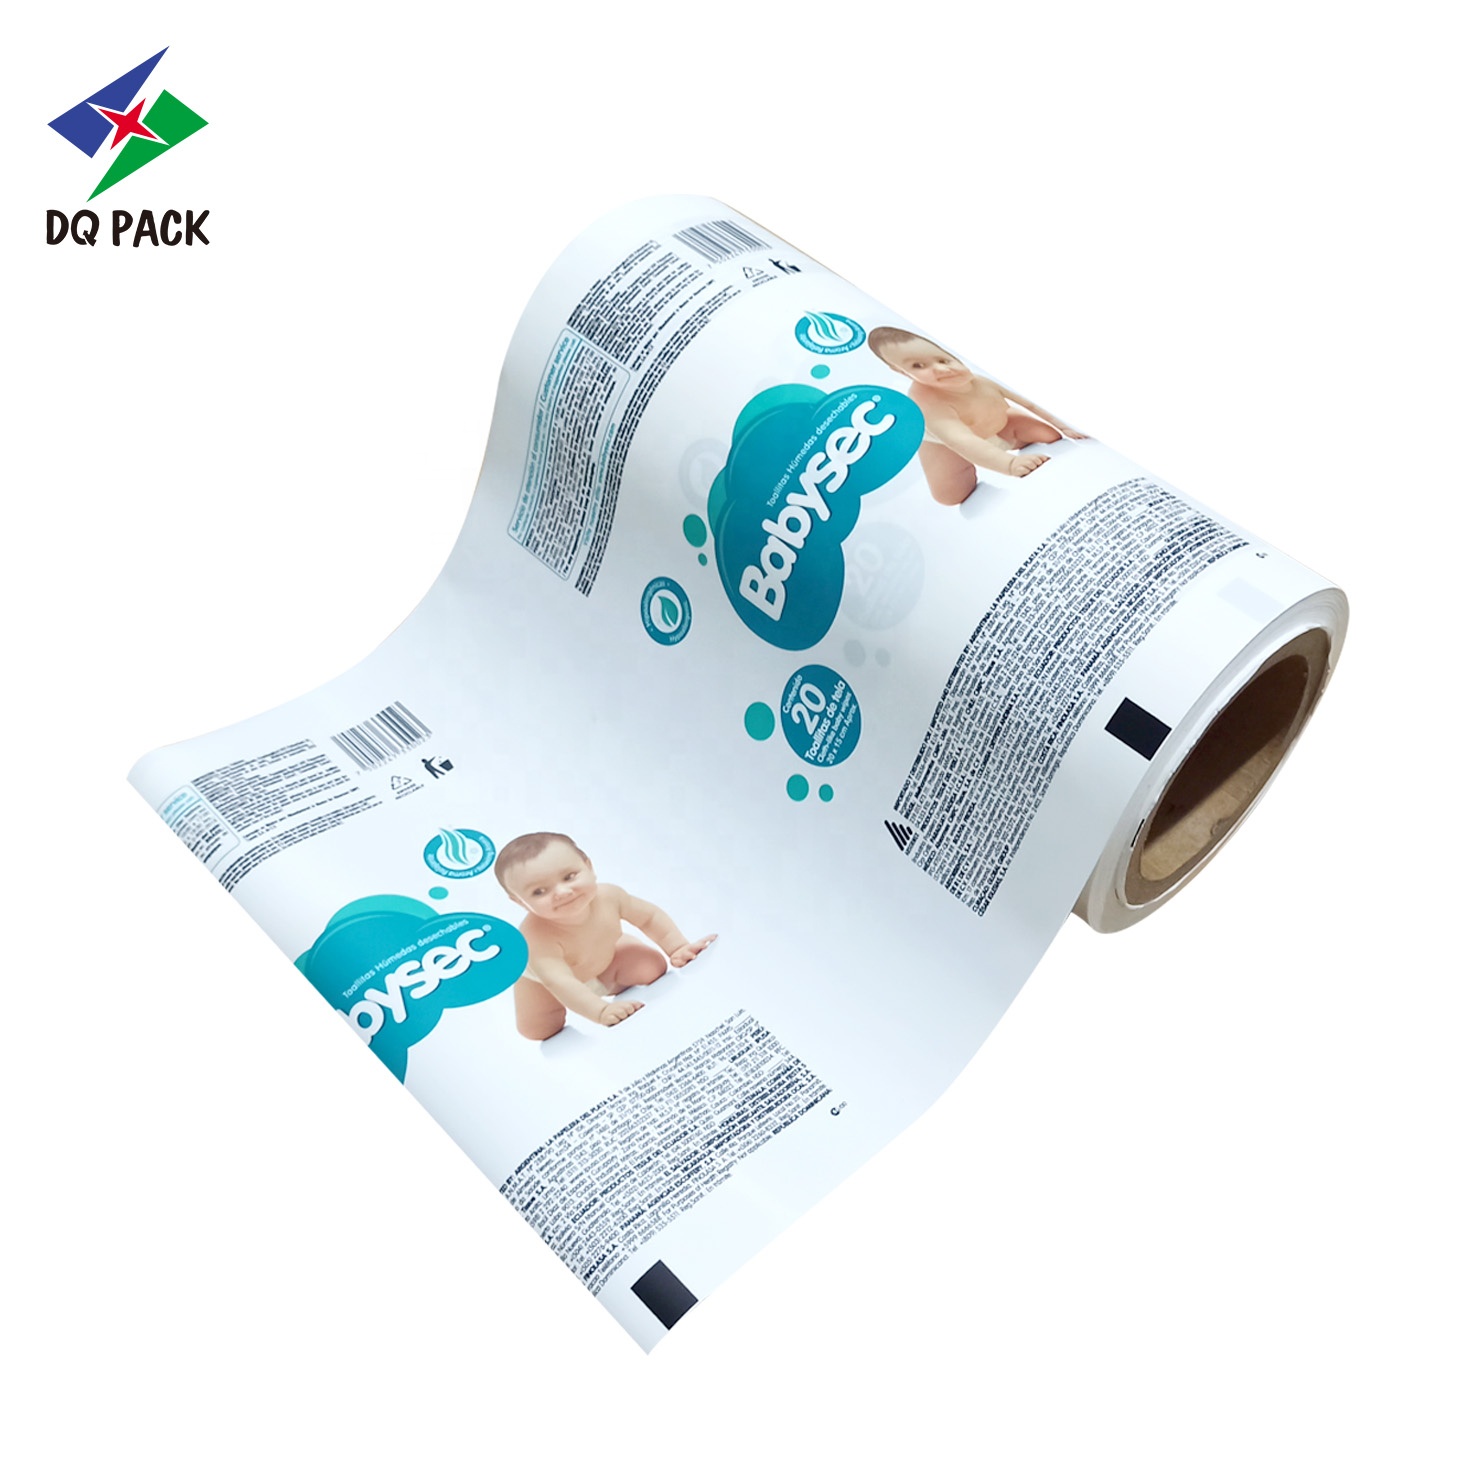 DQ PACK Custom Printed Wet Tissue Packaging Roll Film